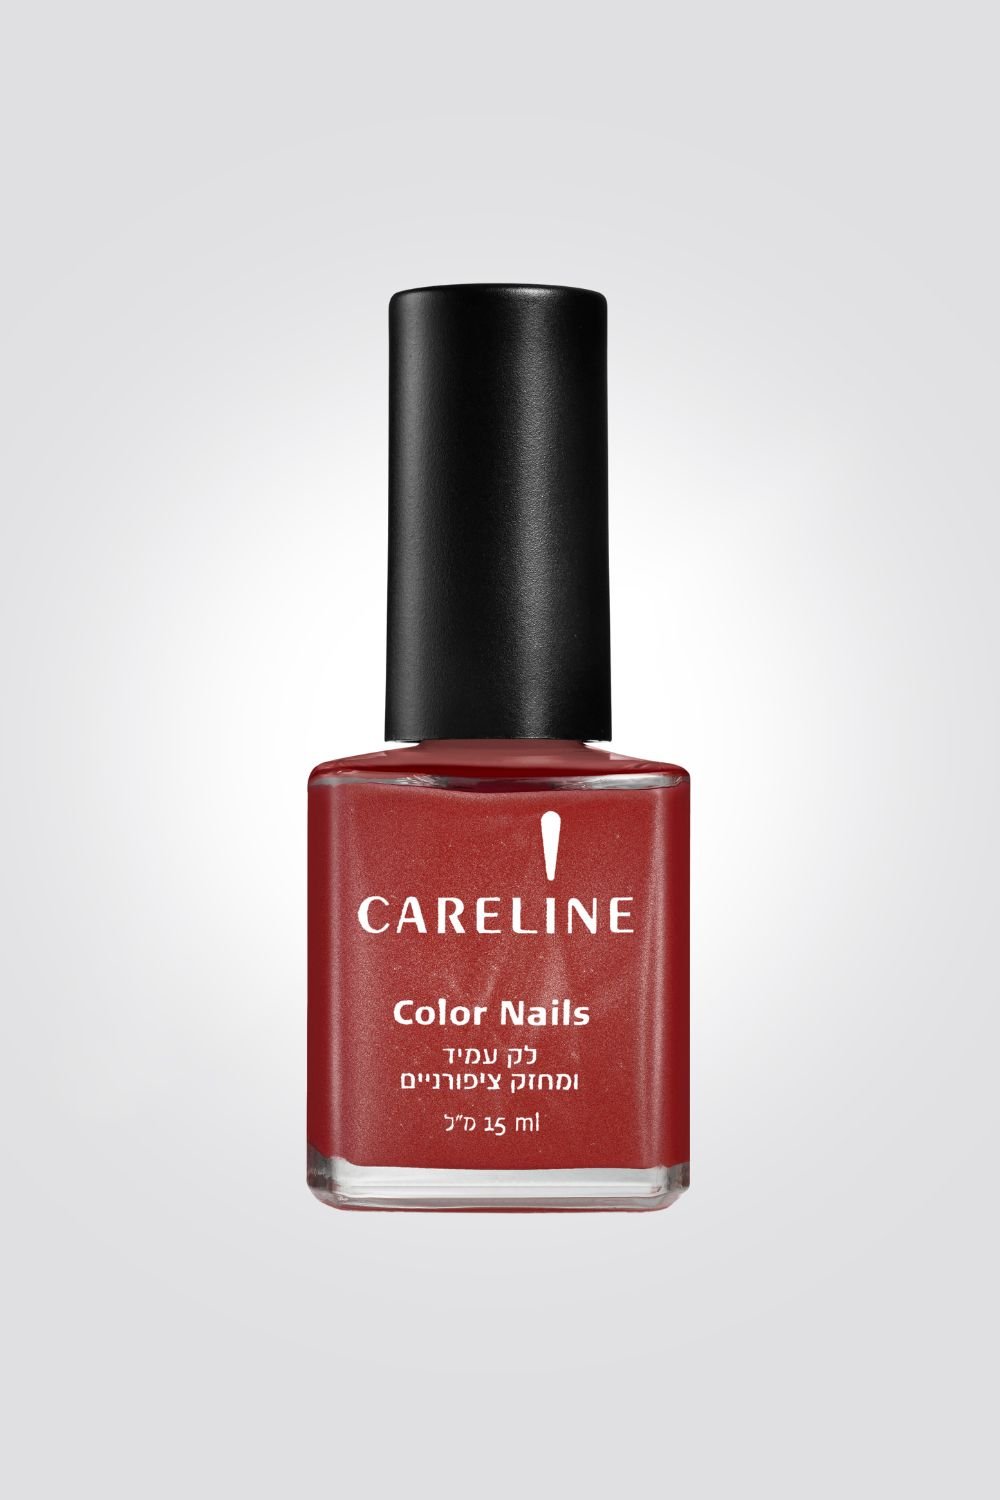 CARELINE - 15 מ"ל COLOR NAILS לק | מגוון צבעים - MASHBIR//365